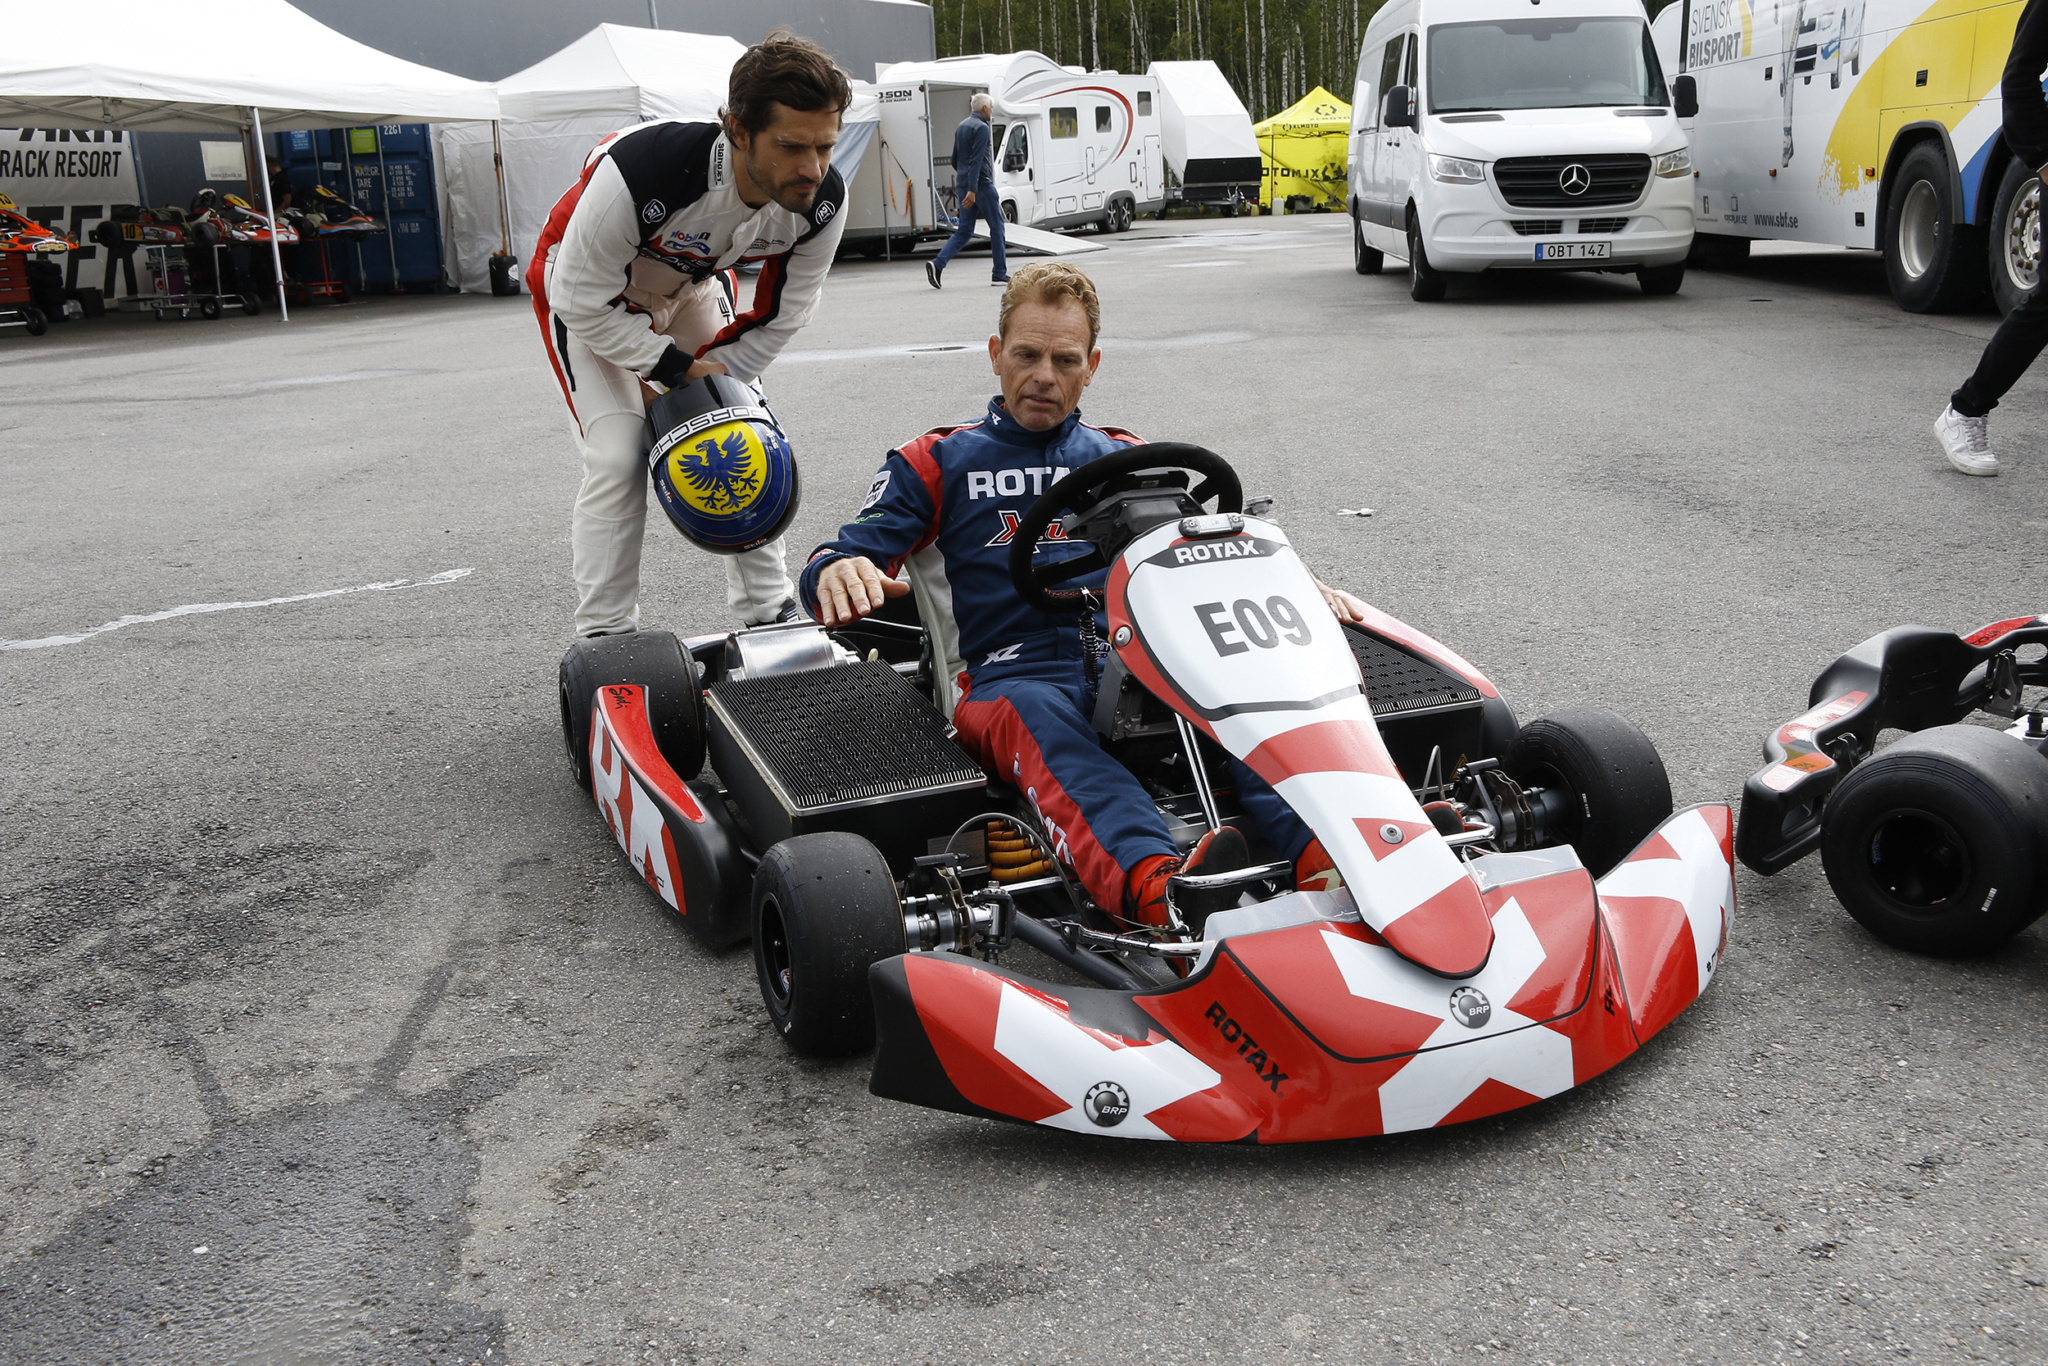 Prince Carl Philipp and Darrell Smith explaining the E20 E Kart